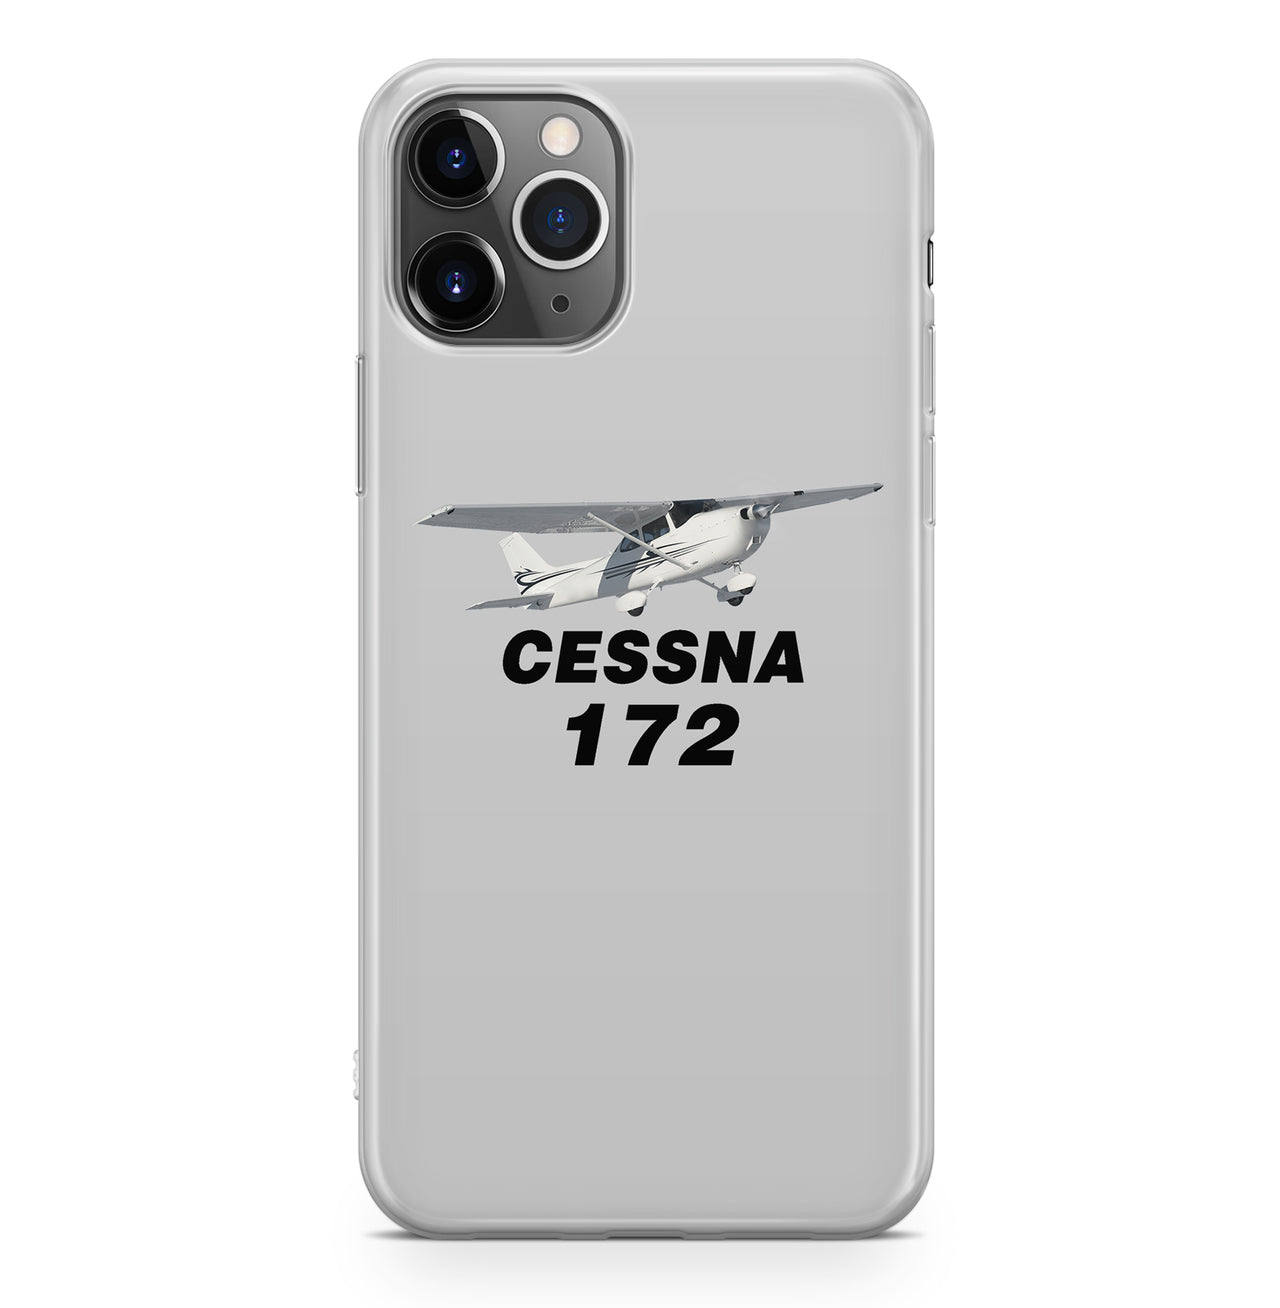 The Cessna 172 Designed iPhone Cases